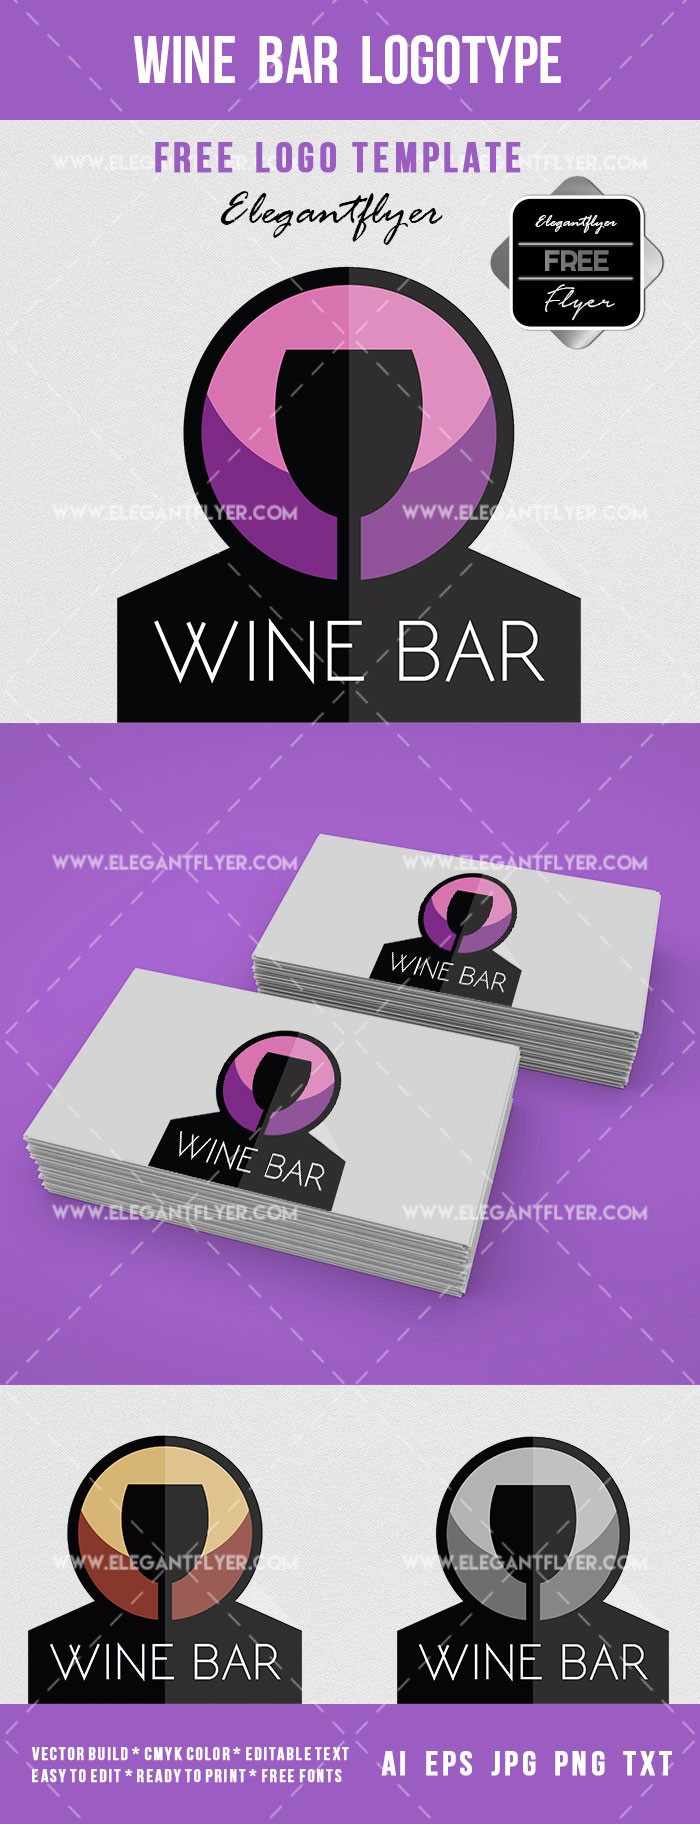 Wine Bar Logotype by ElegantFlyer